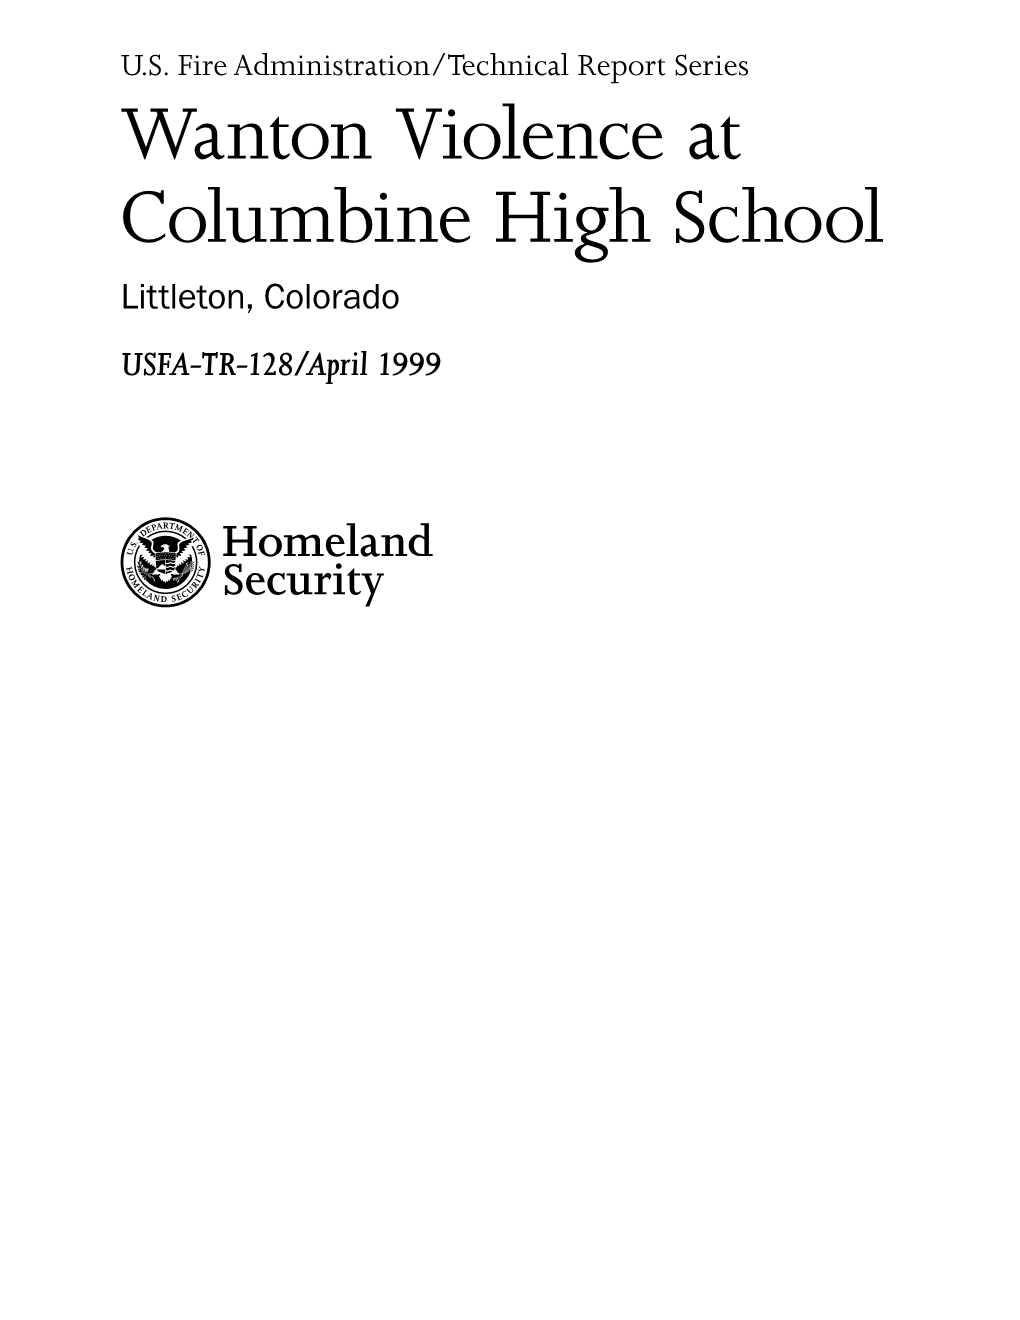 TR-128 Wanton Violence at Columbine High School